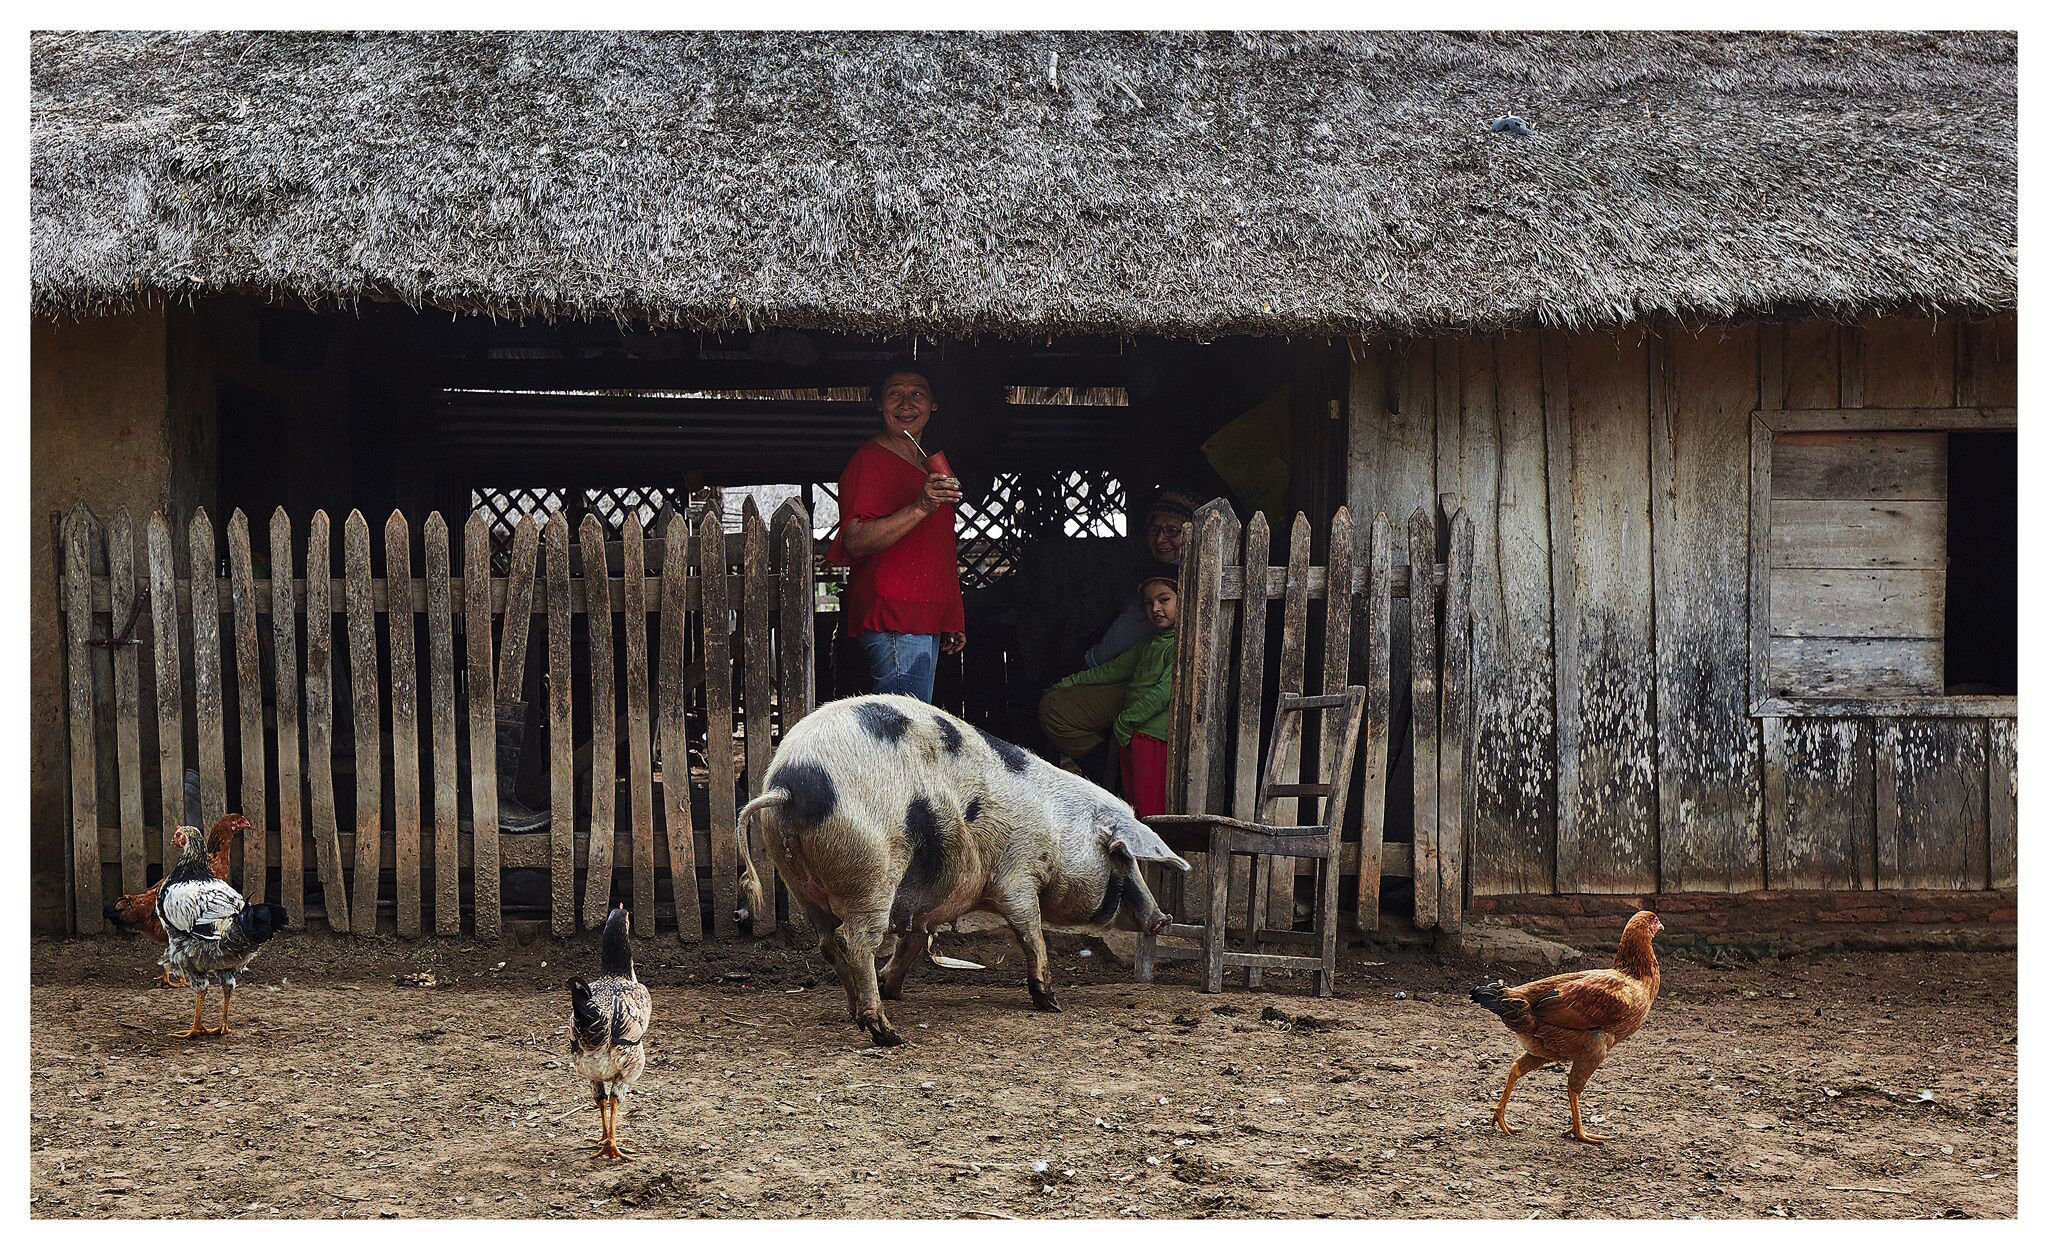 Farm in Paraguay, courtesy Jose Ahedo